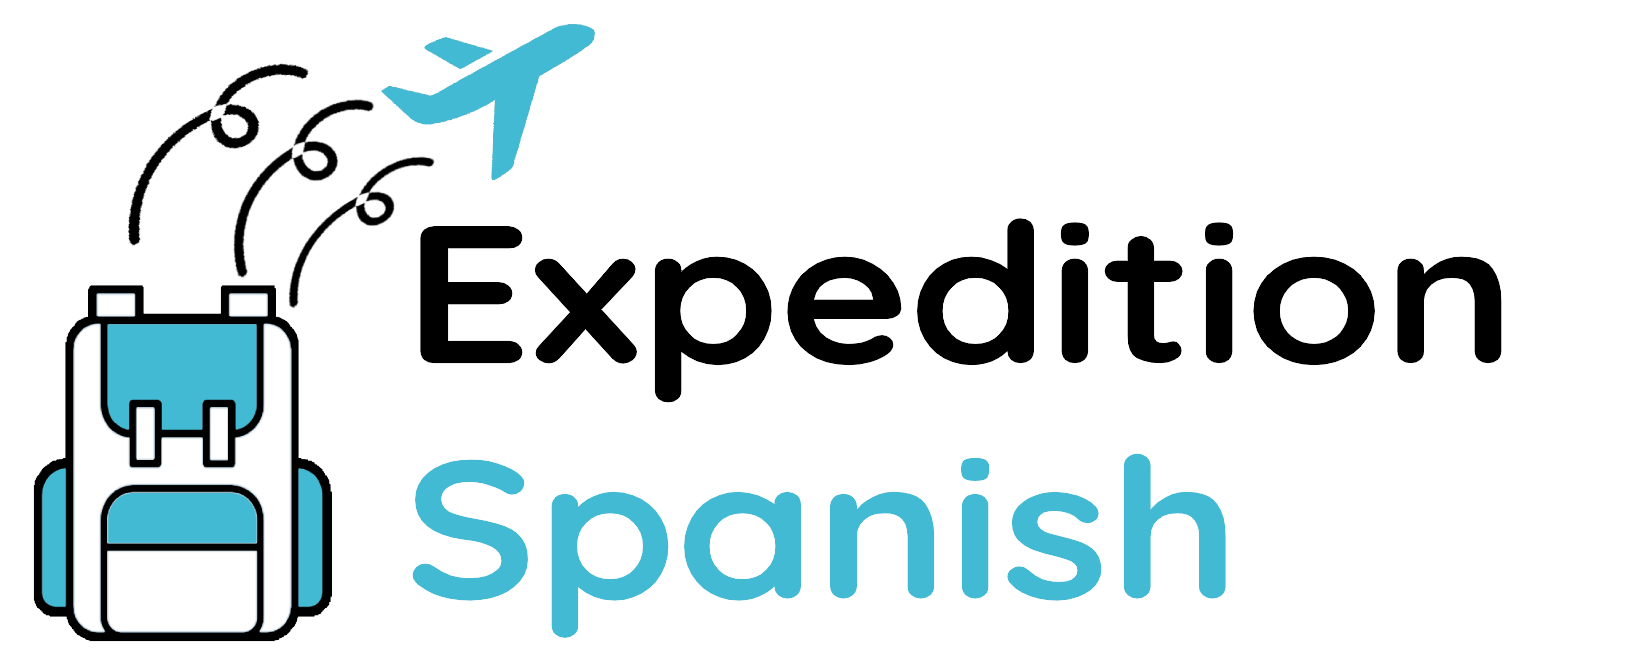 Expedition Spanish logo